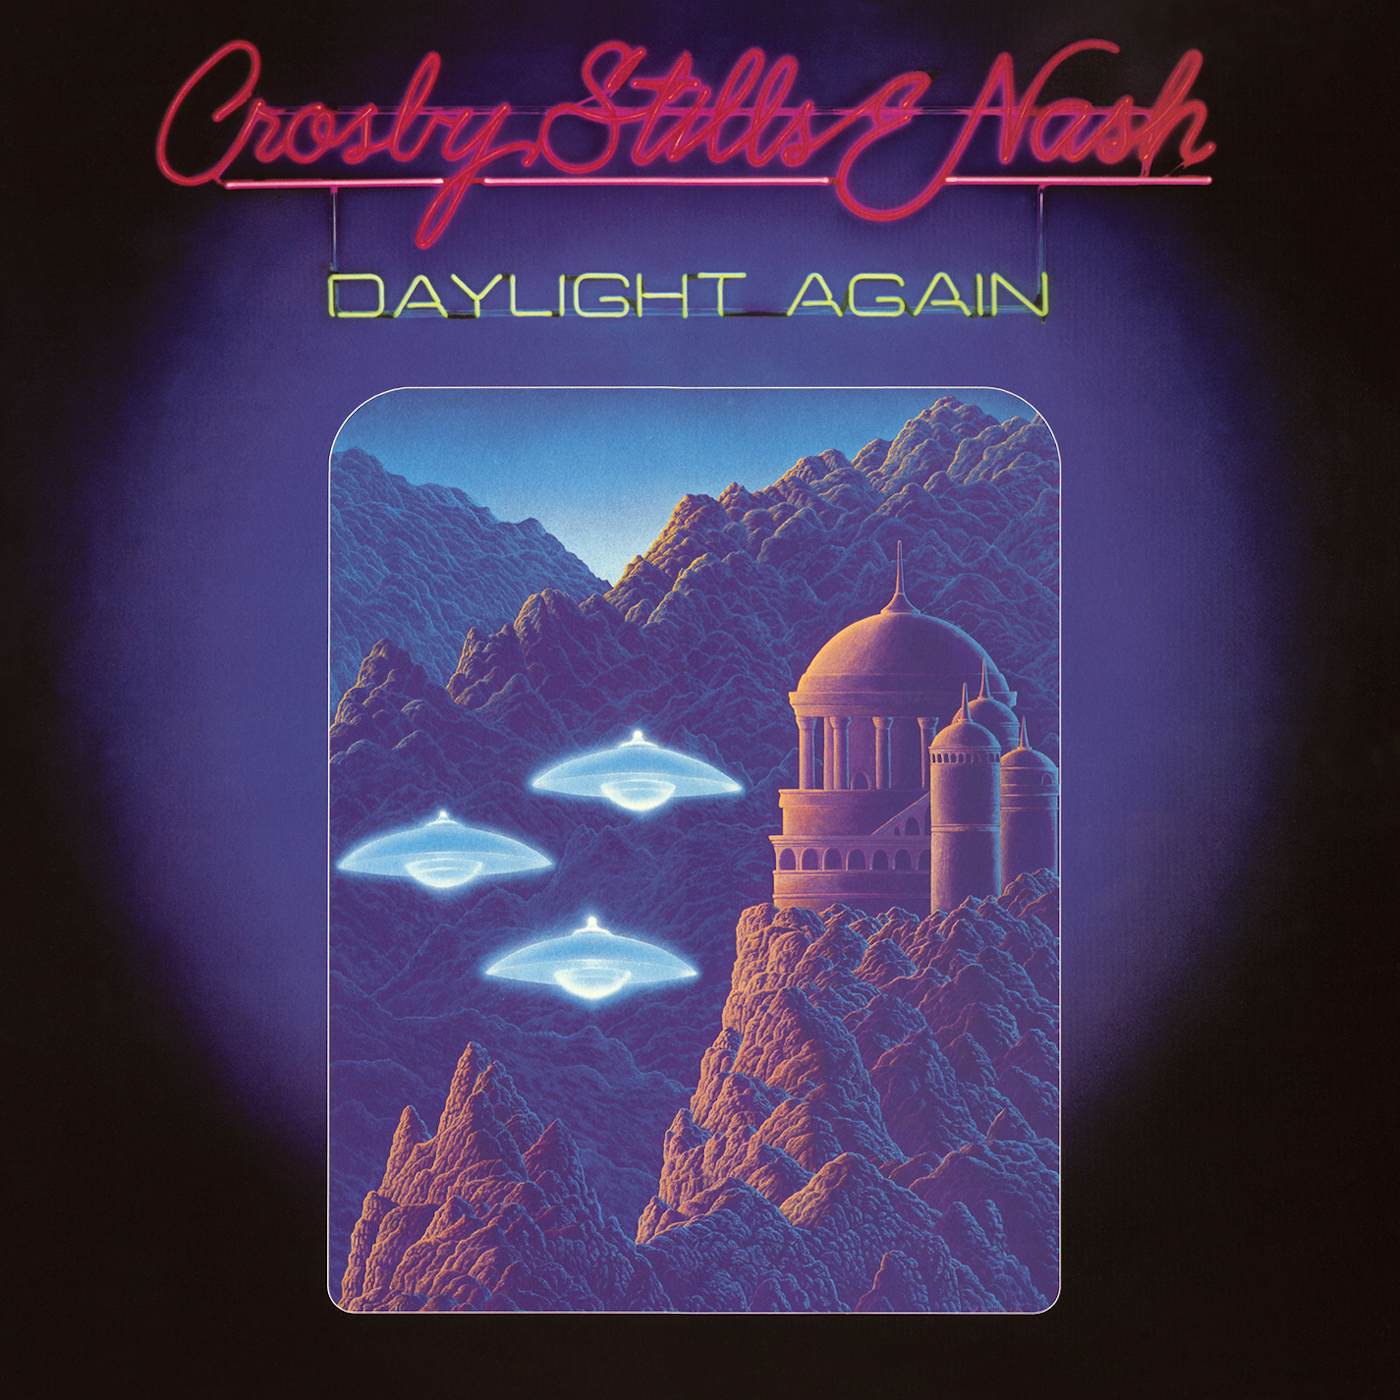 Crosby, Stills & Nash Daylight Again Vinyl Record